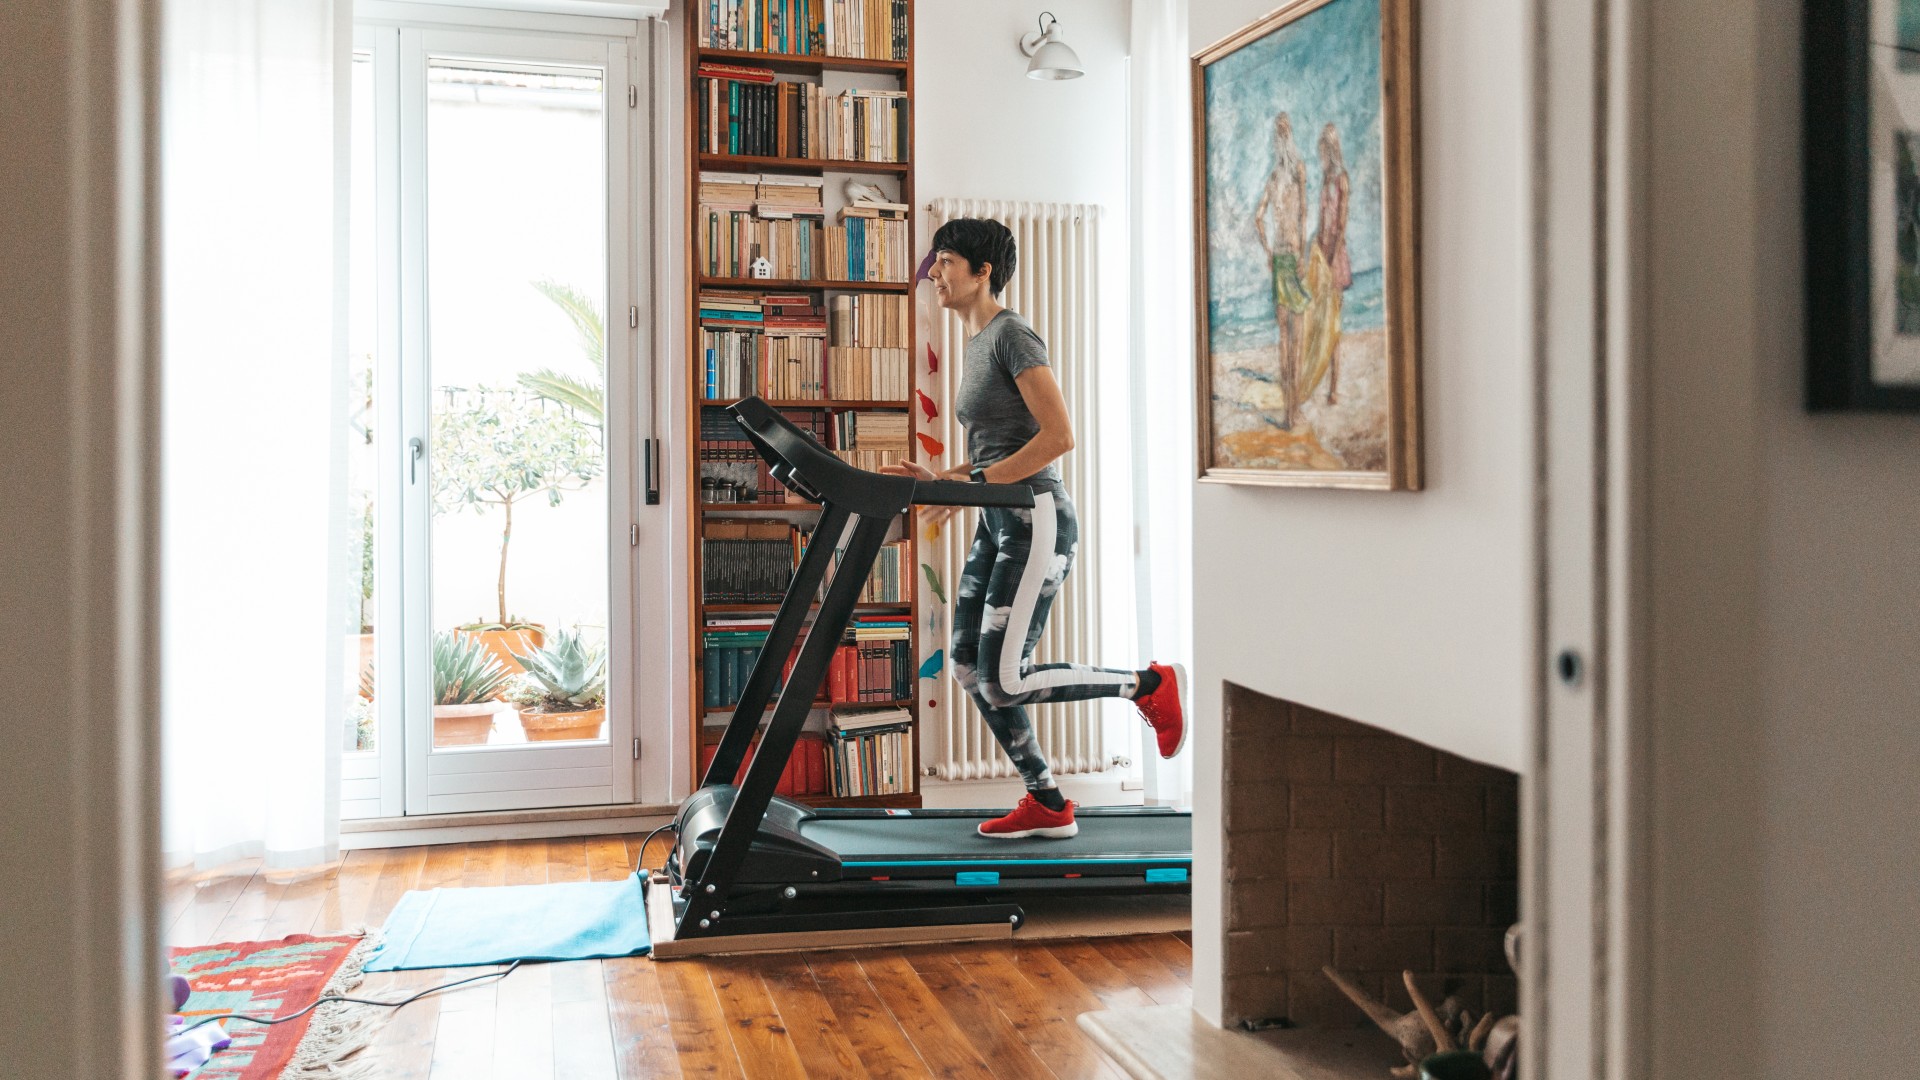 Mobvoi Home Treadmill - Your Safe Home Gym.